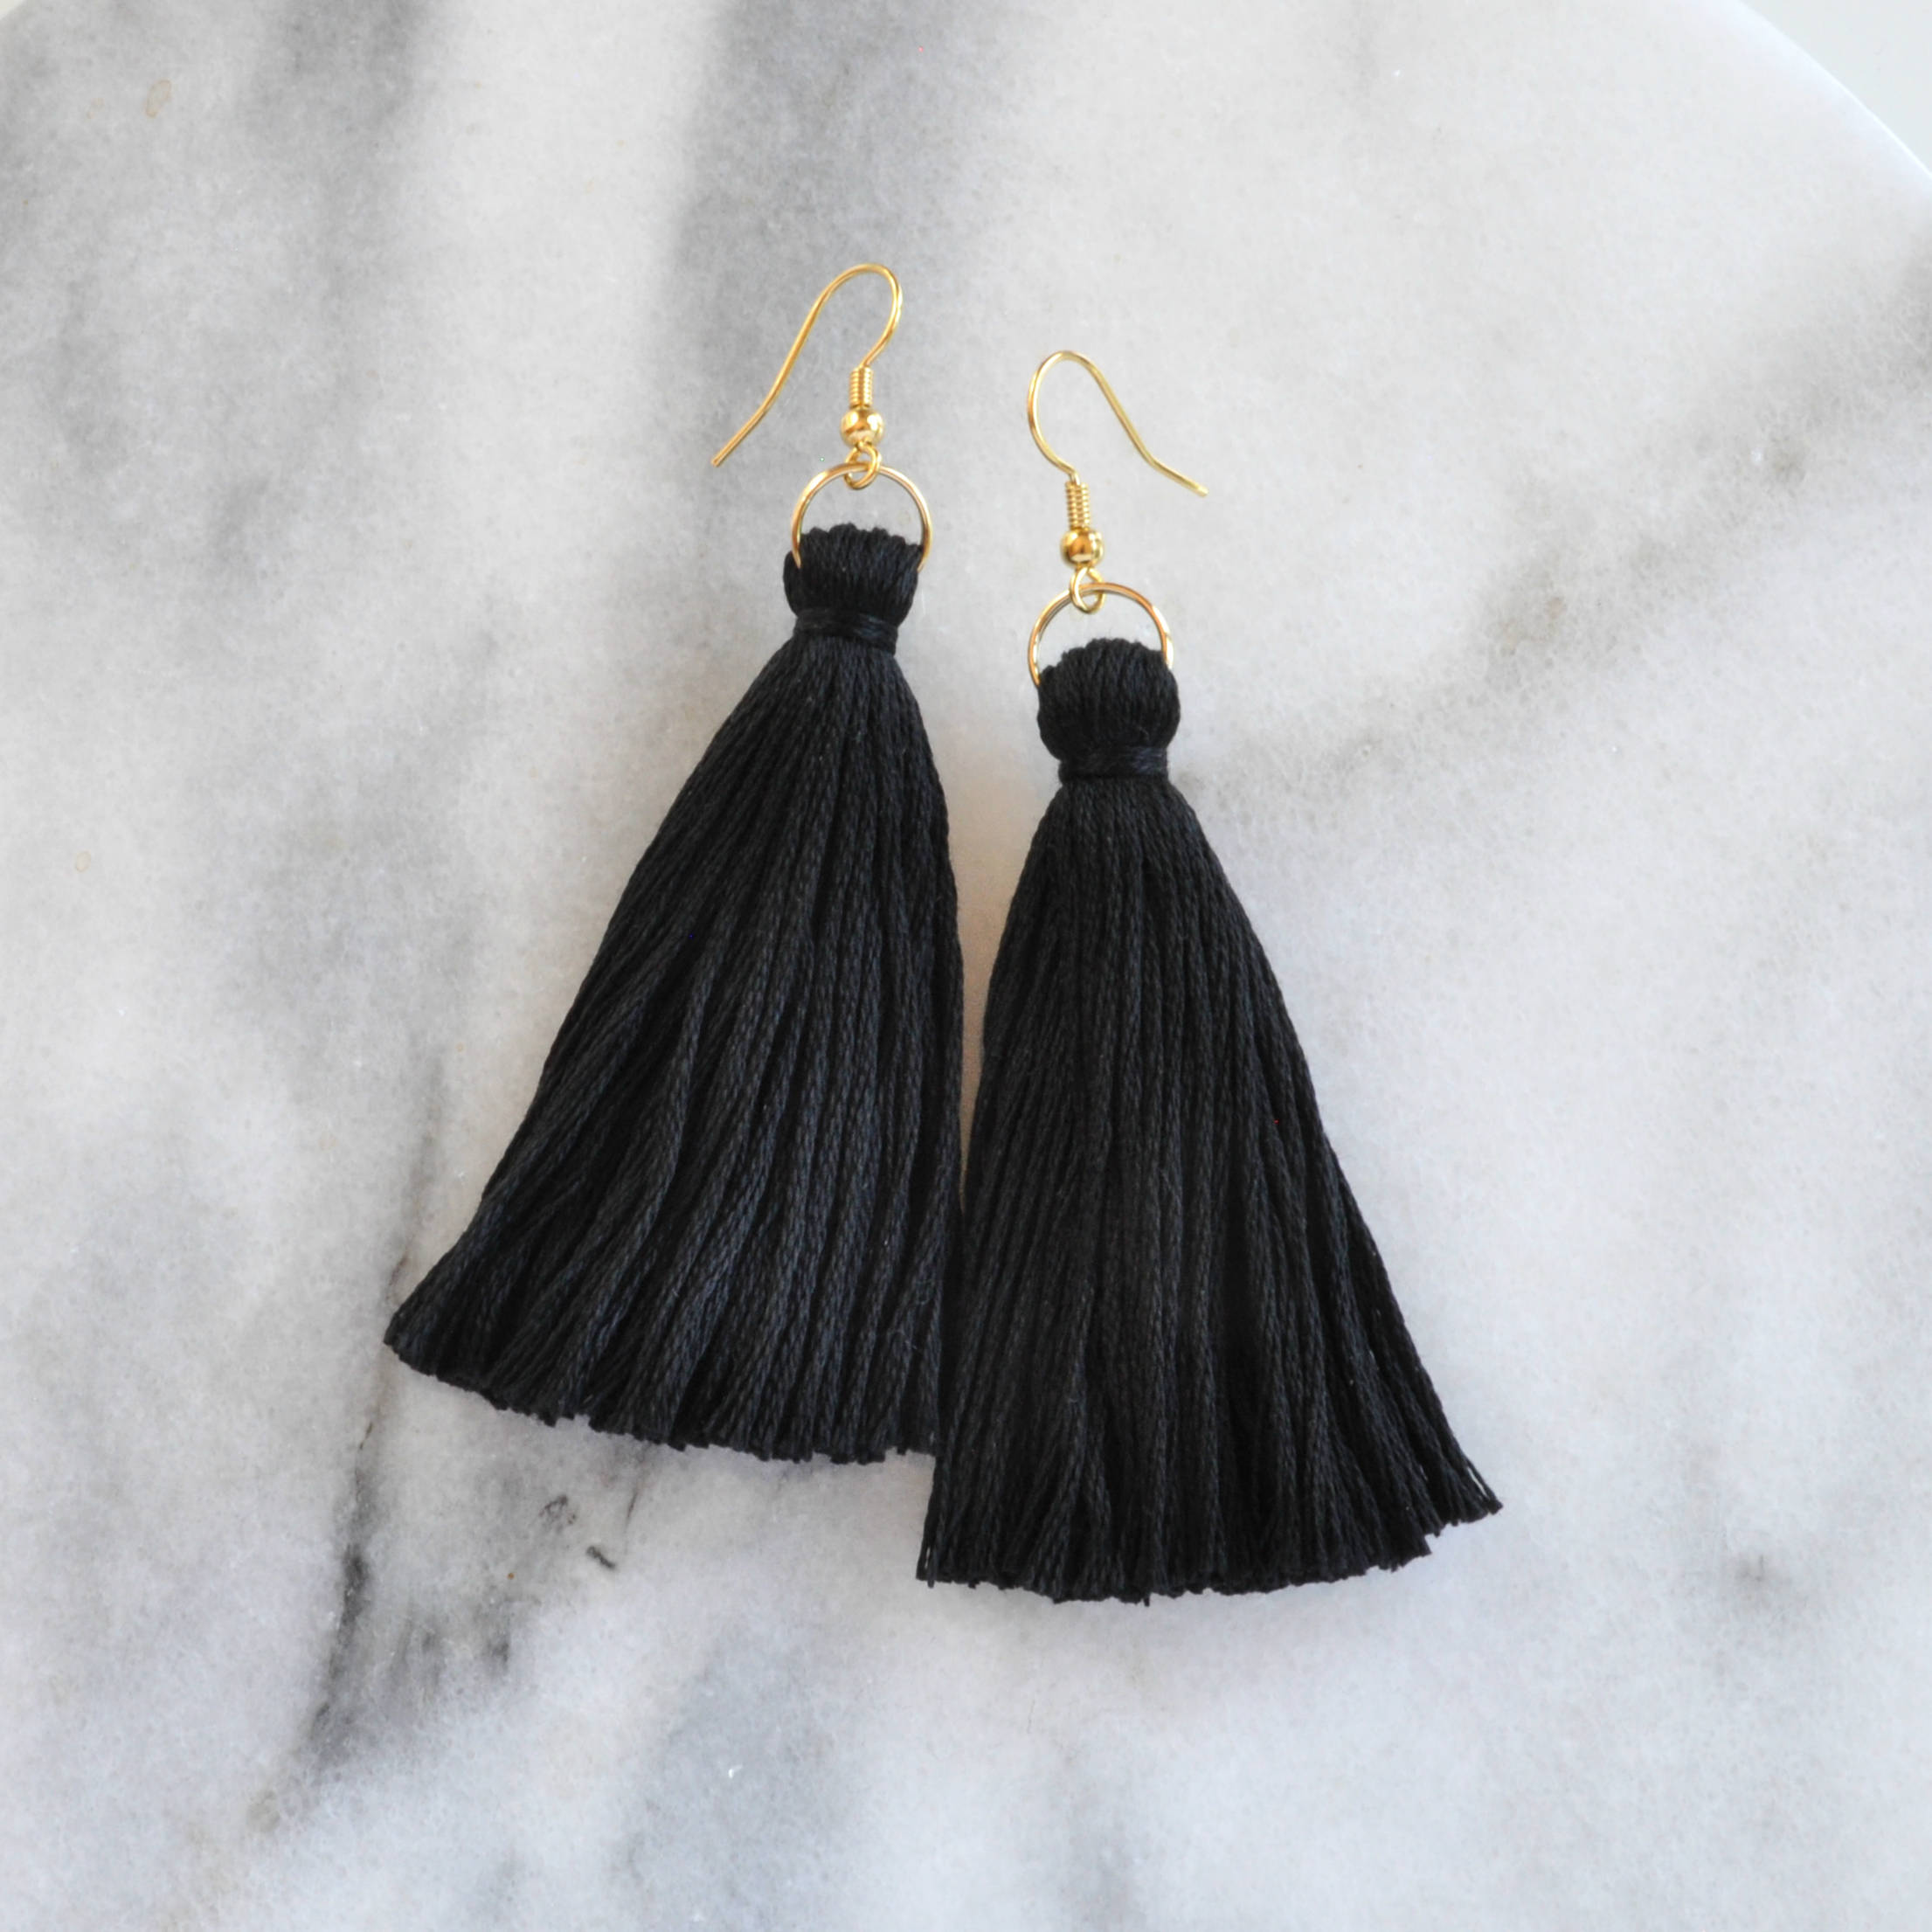 Libby & Smee black tassel earrings in long, still life 